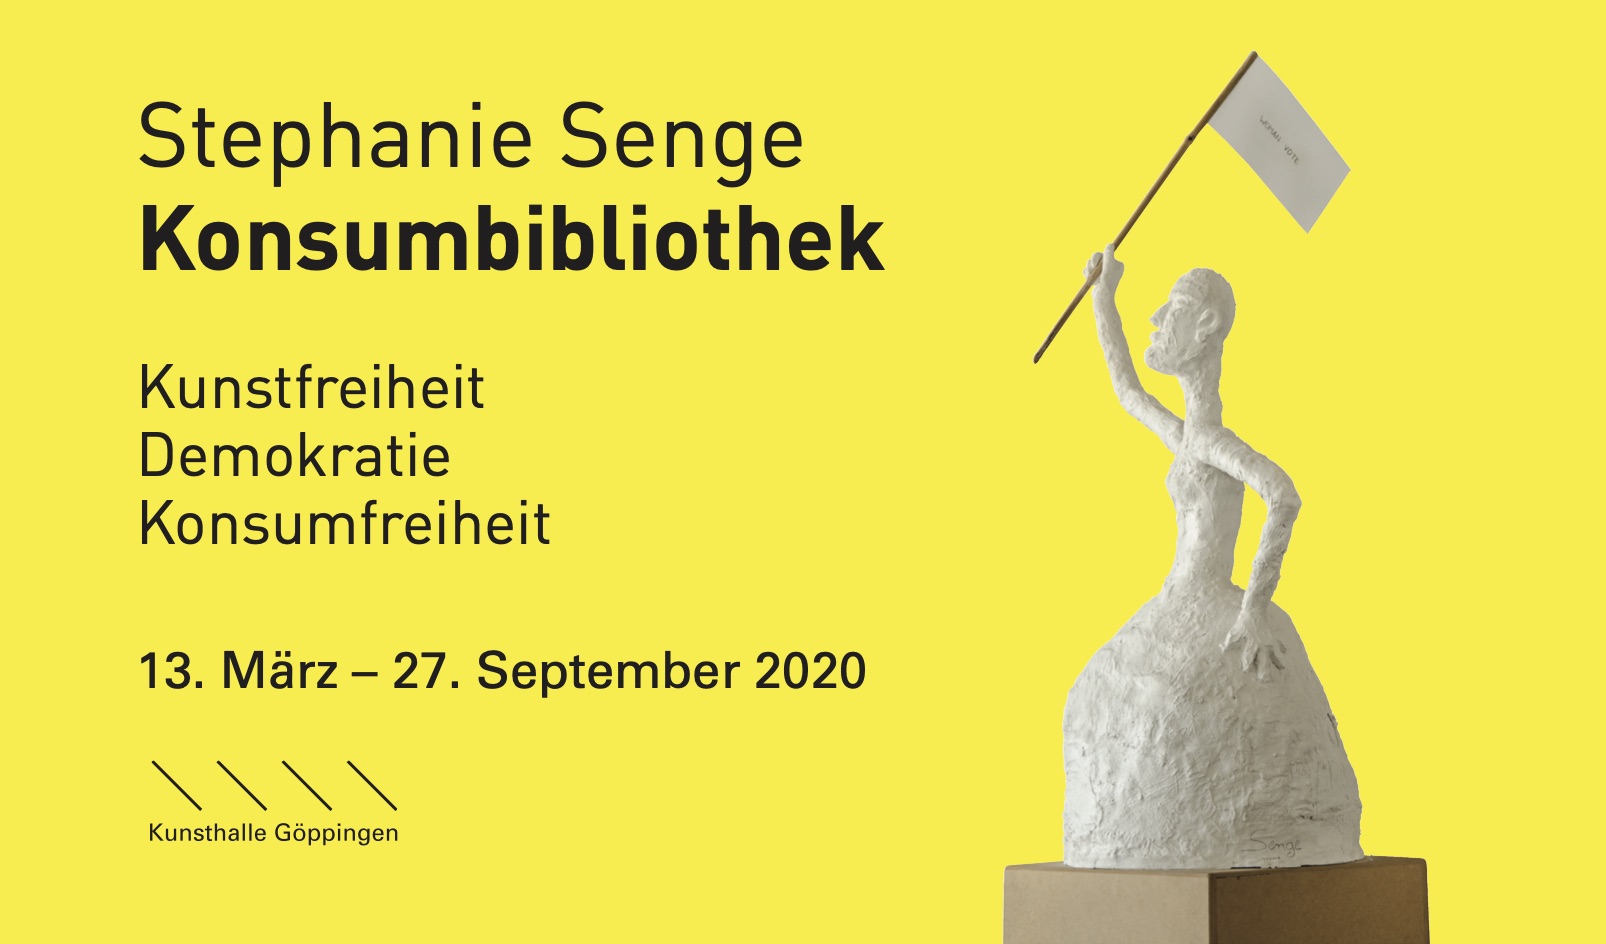 Stephanie Senge: Konsumbibliothek. Kunsthalle Göppingen. Fotografie: Ulrike Pfeiffer, 2020